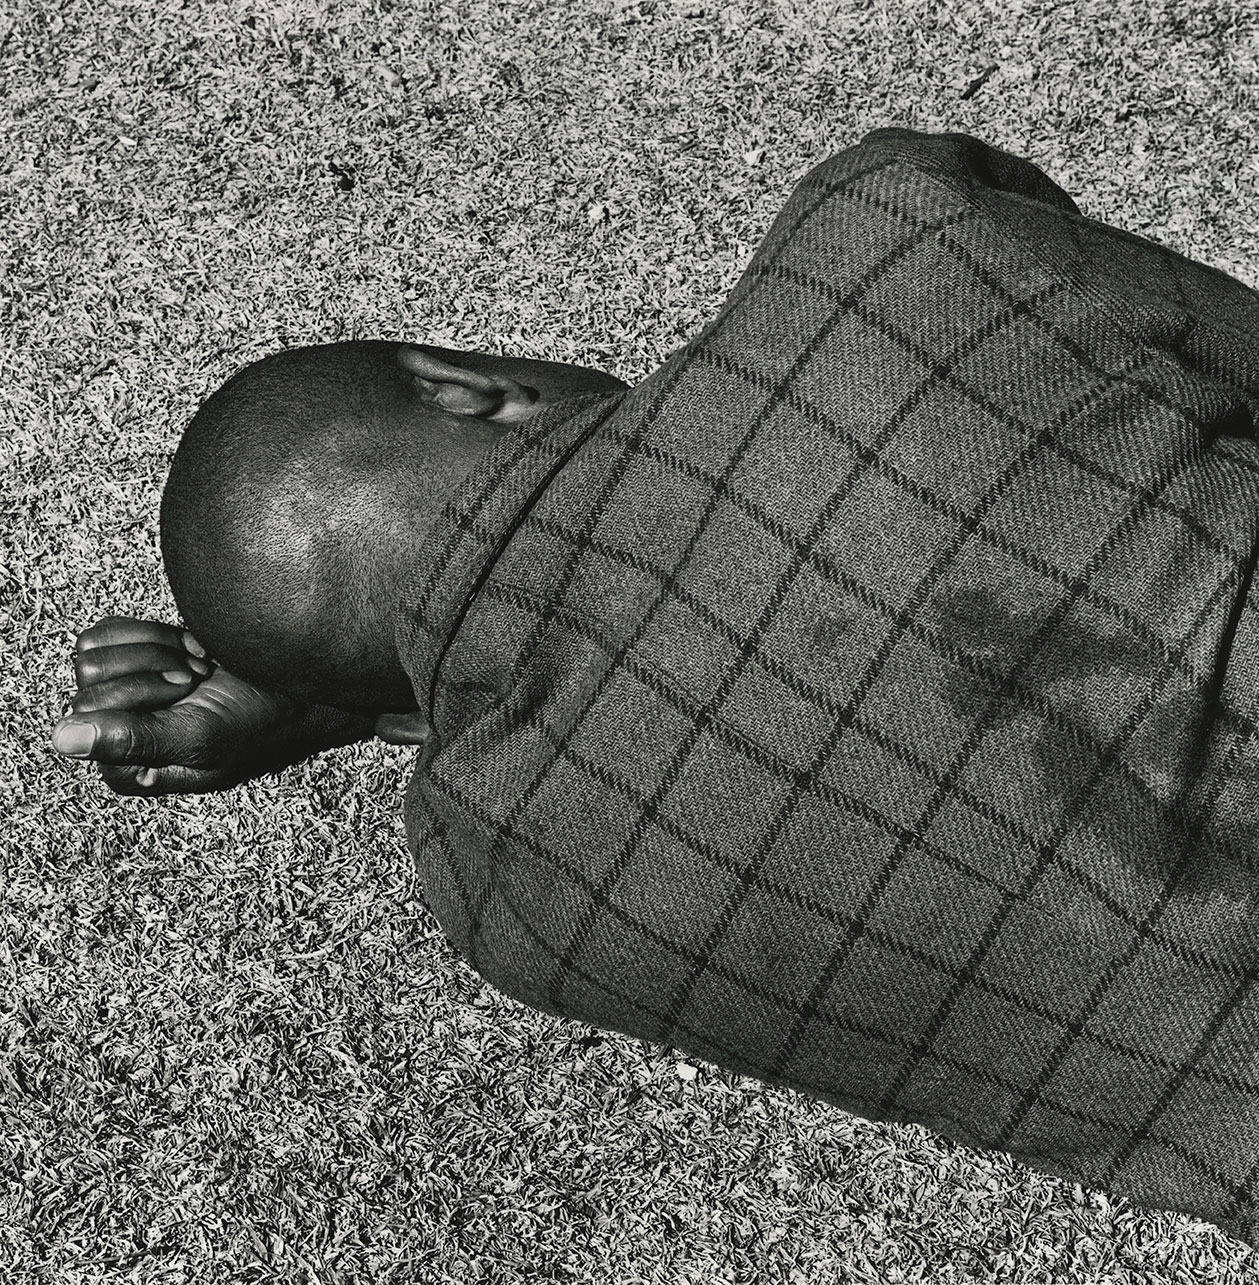 Man Sleeping, Jouberg Park, Johannesburg, August 1975